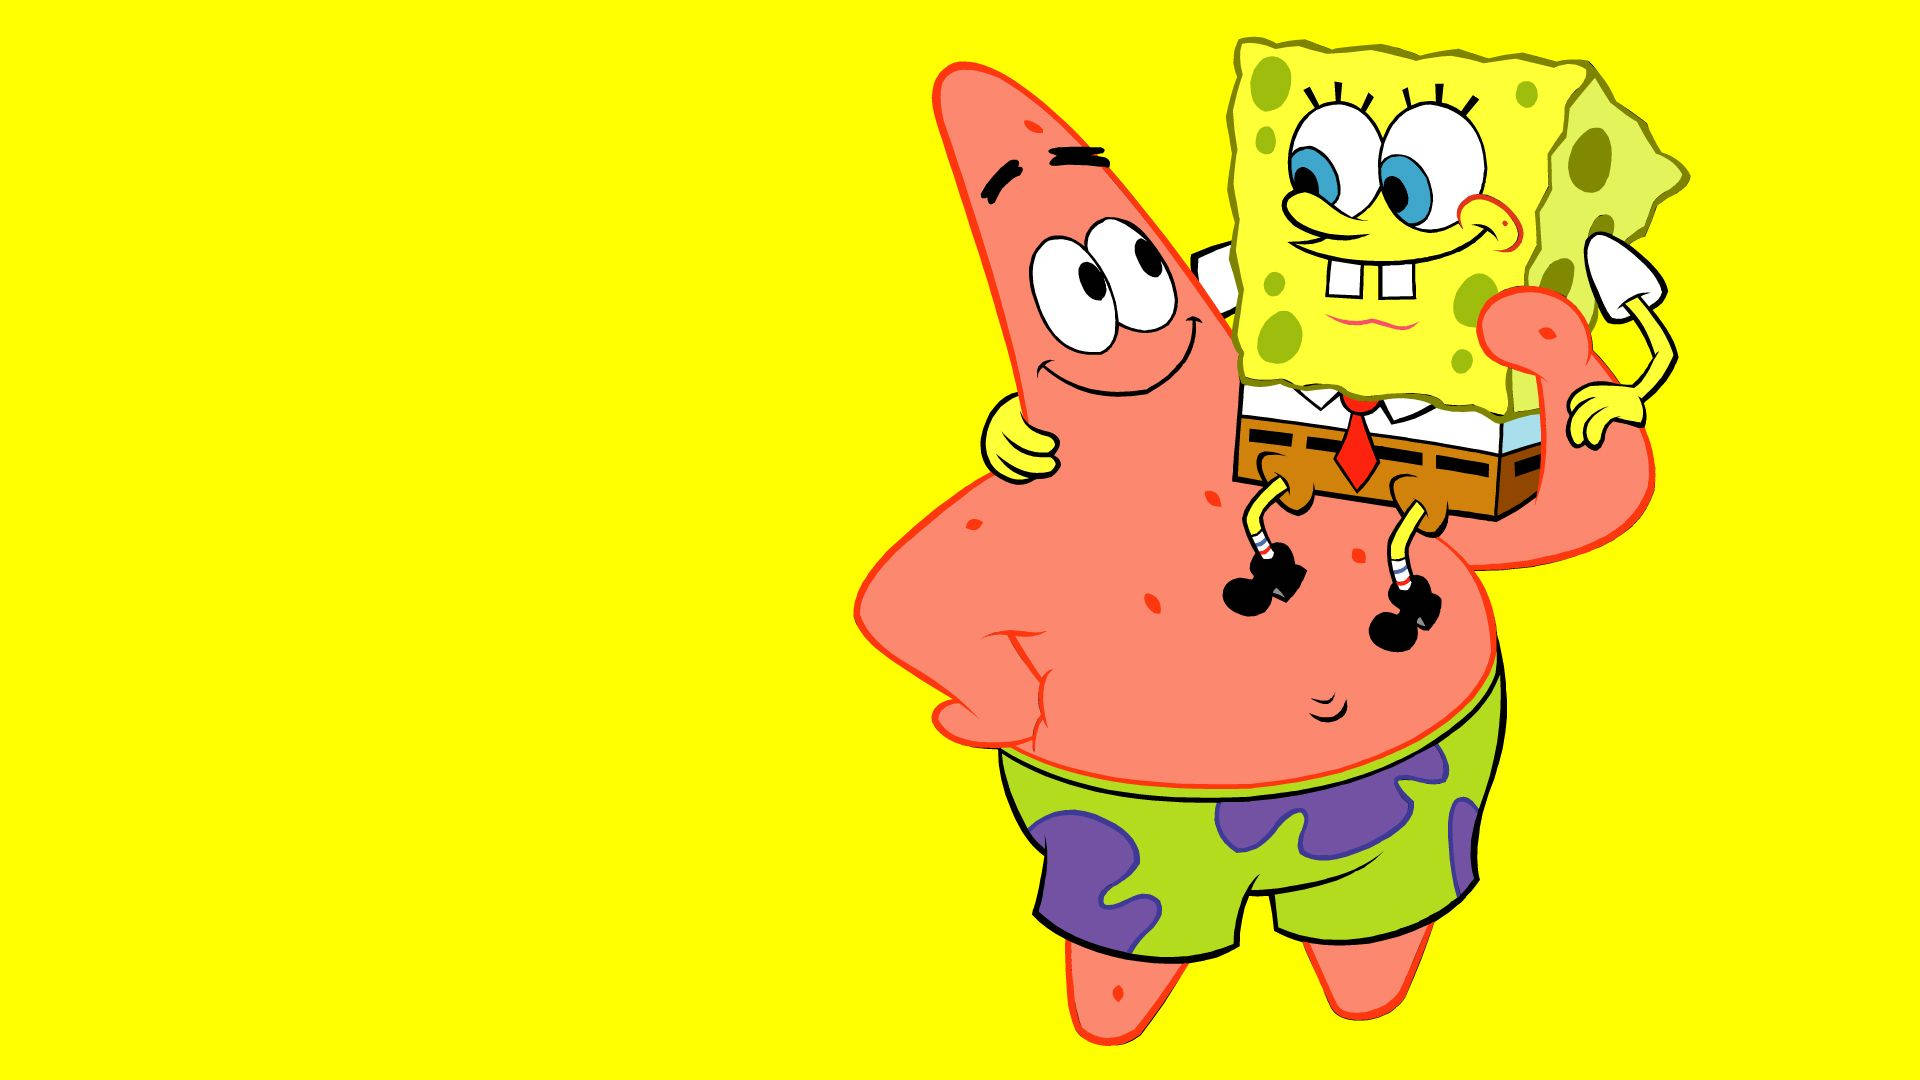 Adorable Spongebob And Patrick Background